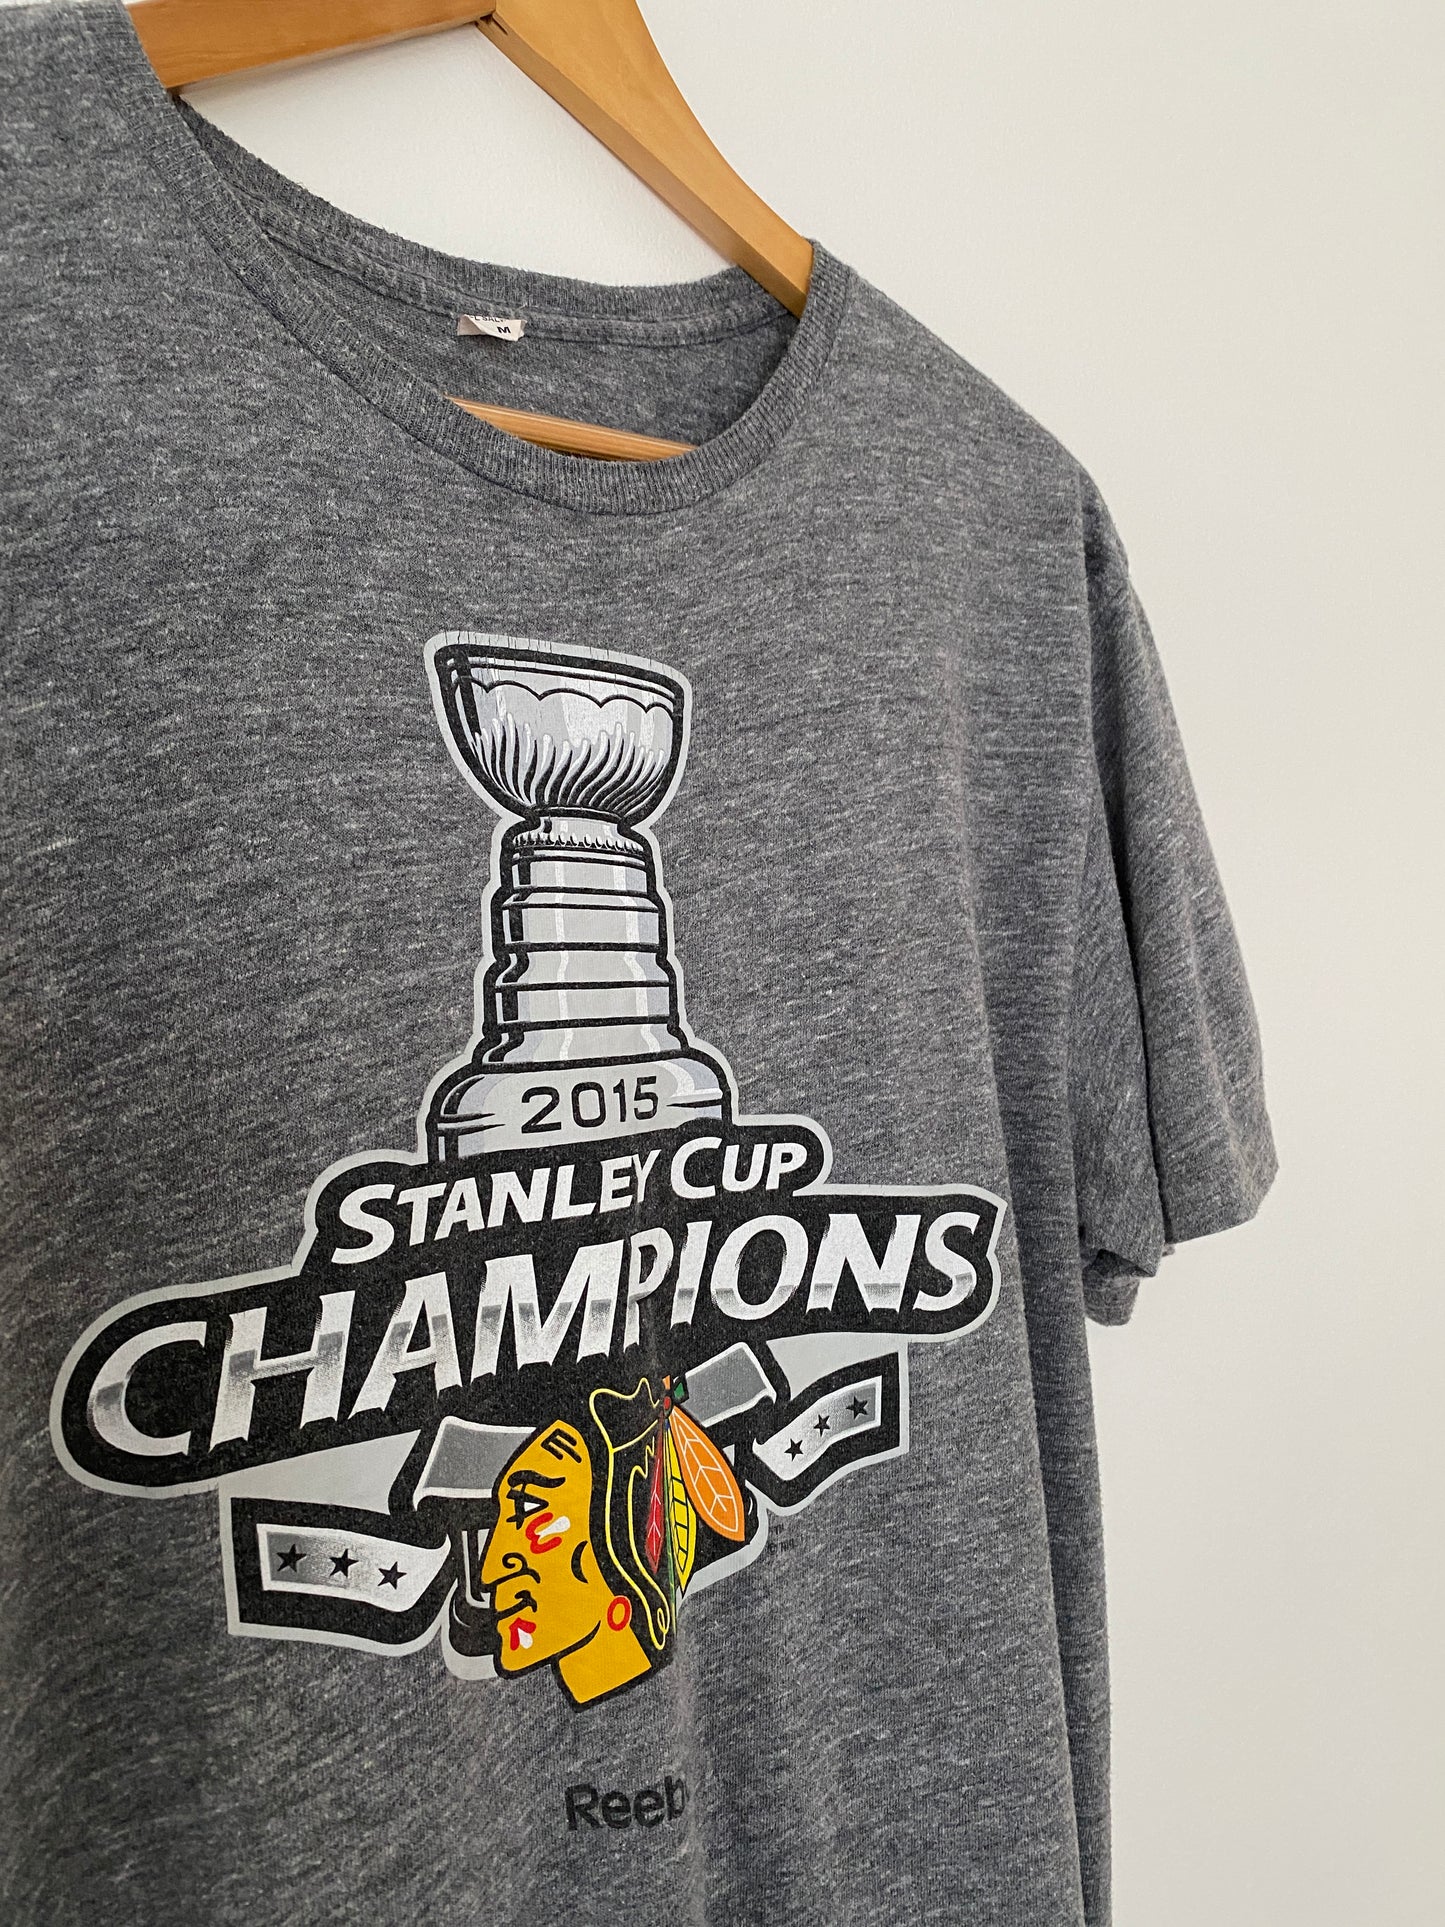 2015 Stanley Cup Champions Chicago Blackhawks Ice Hockey T-shirt - M